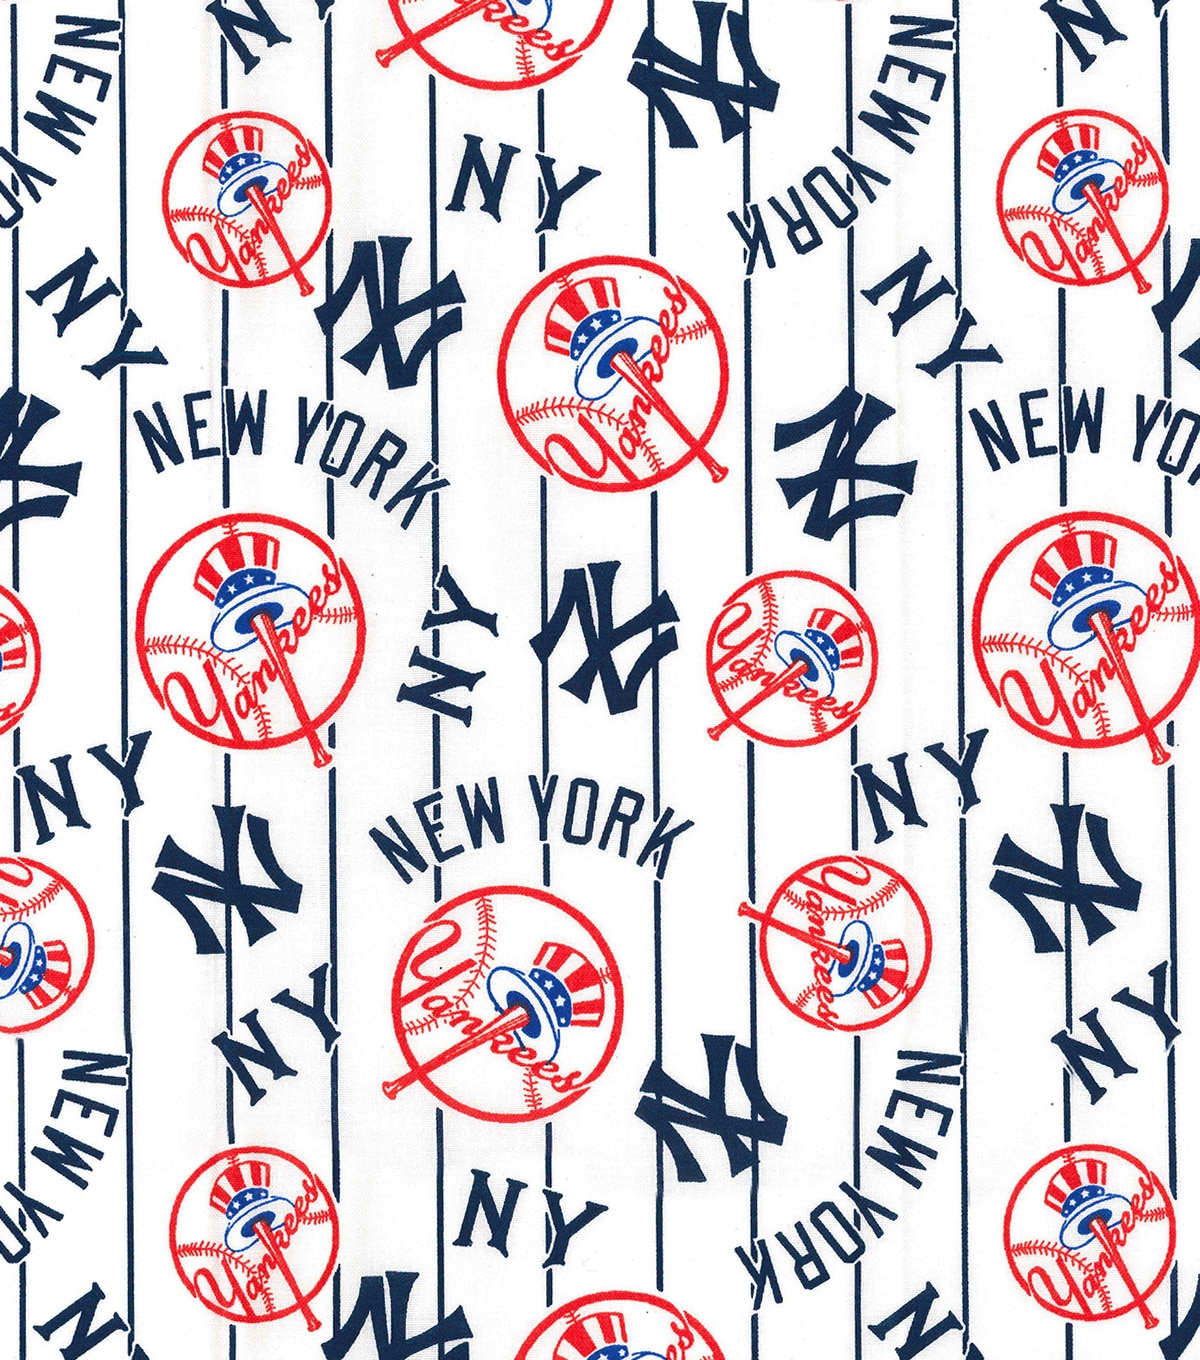 Cooperstown New York Yankees Cotton Fabric Joann